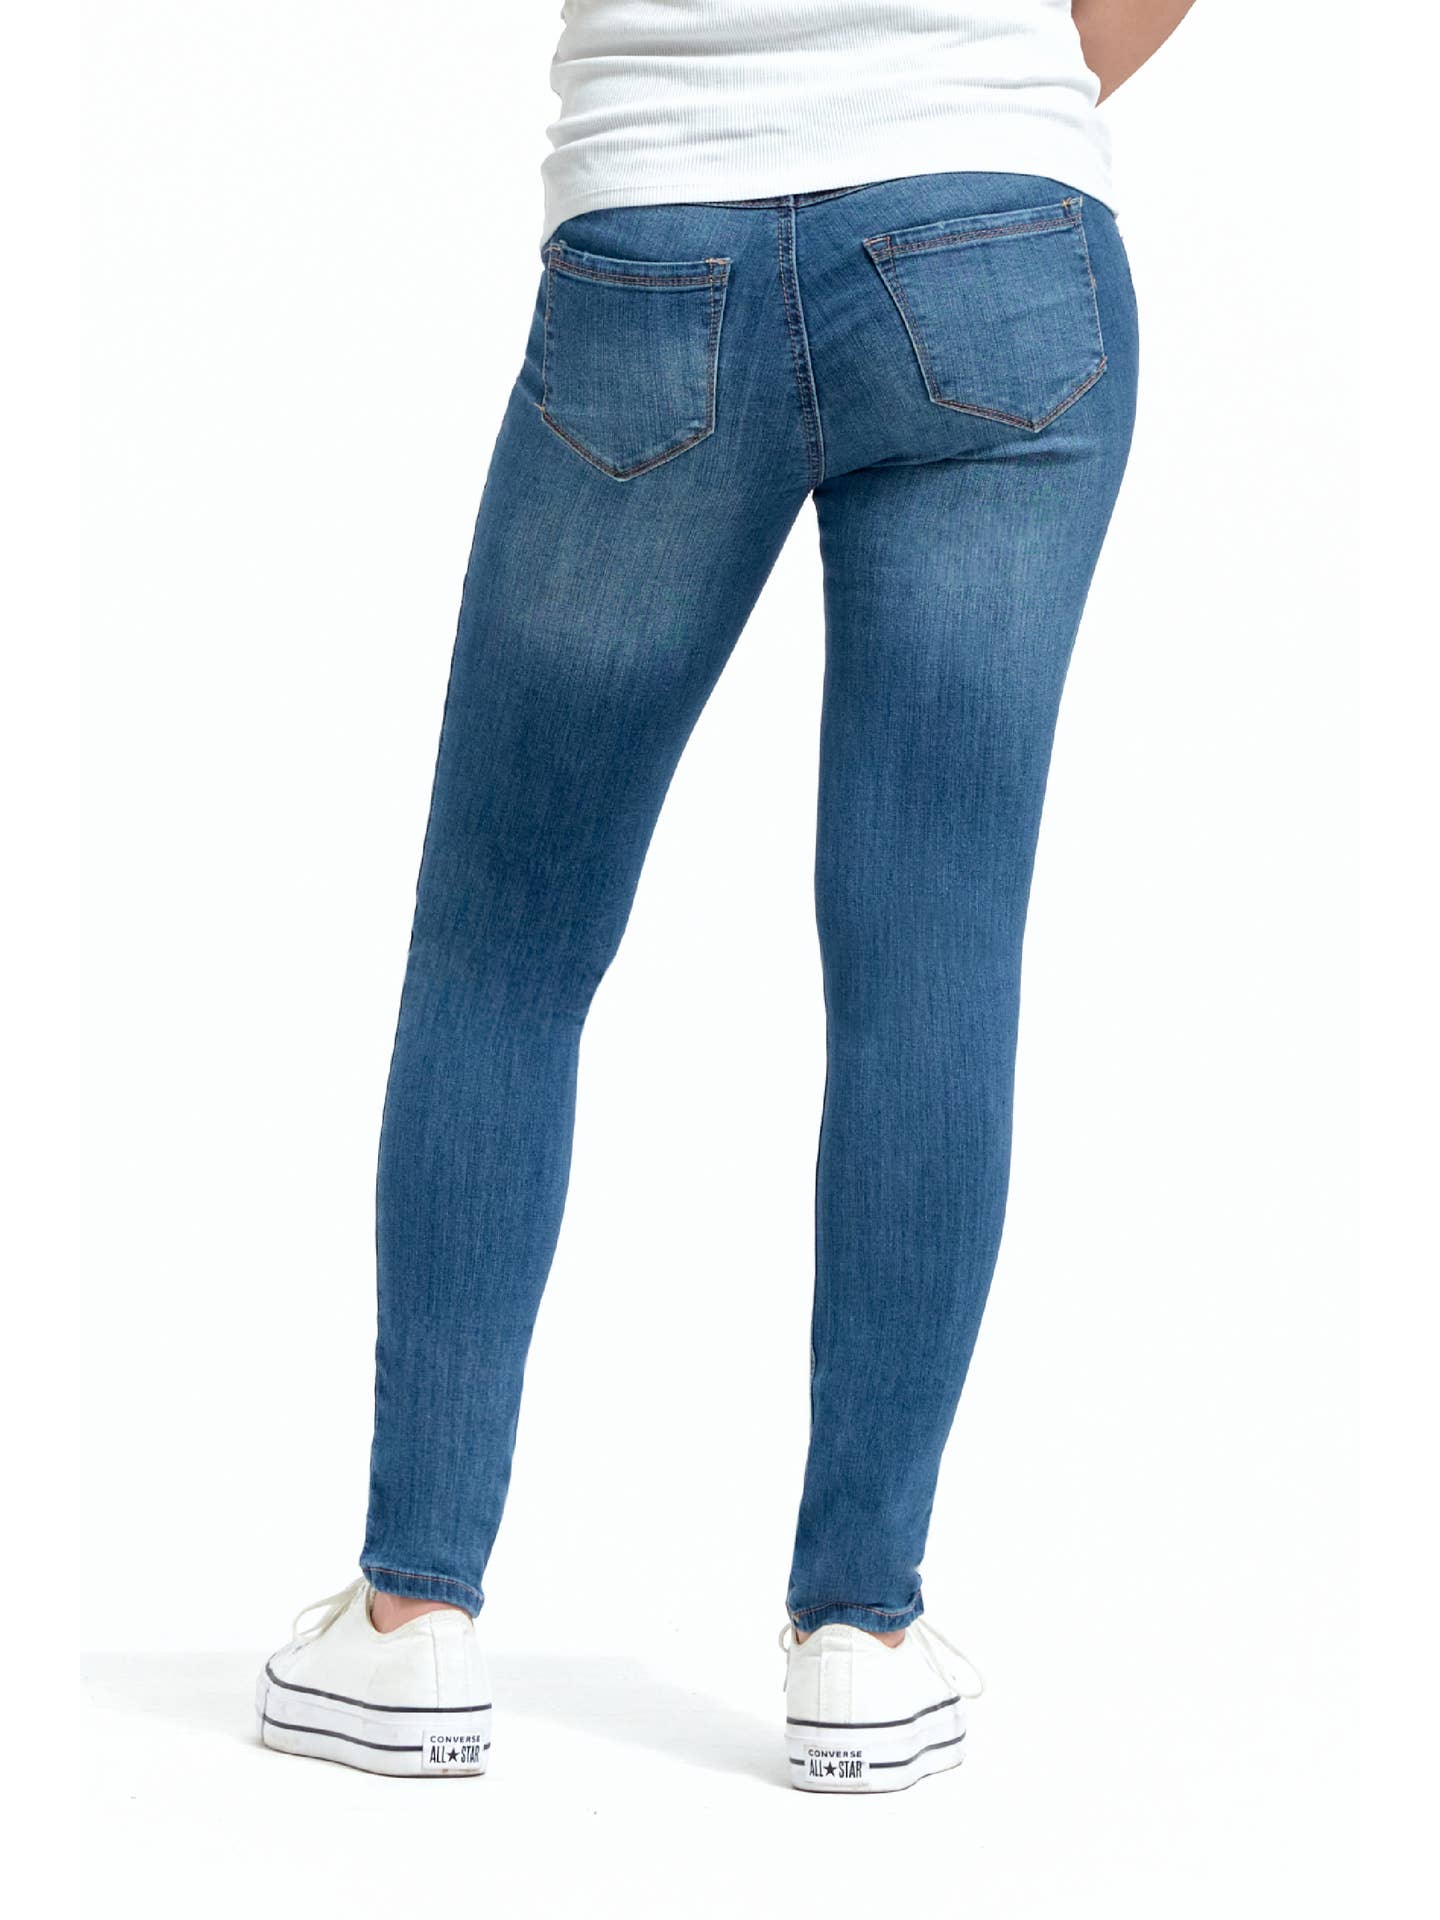 Raelynn Distressed Skinny Jeans